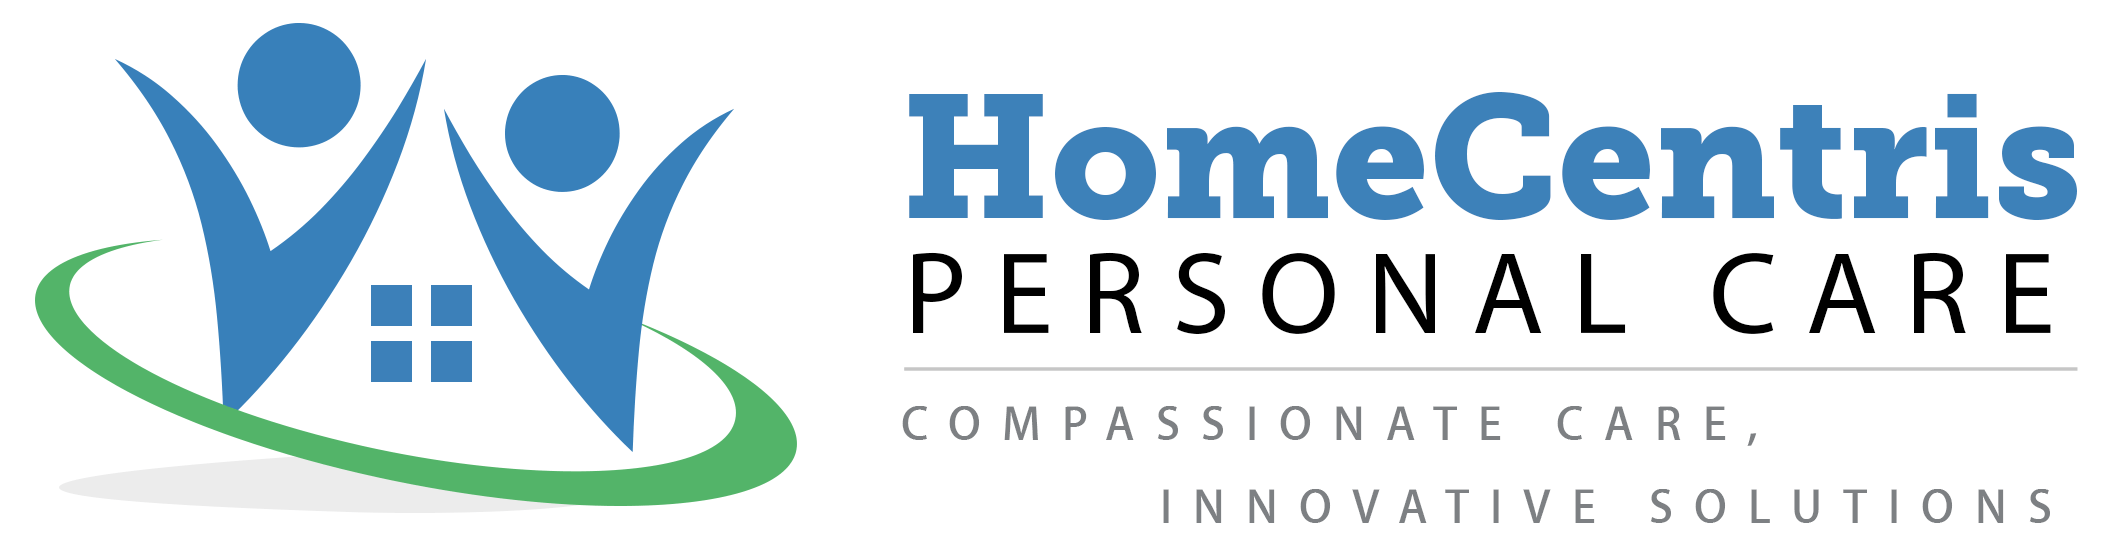 Personal Care Logo - About HomeCentris - HomeCentris Healthcare